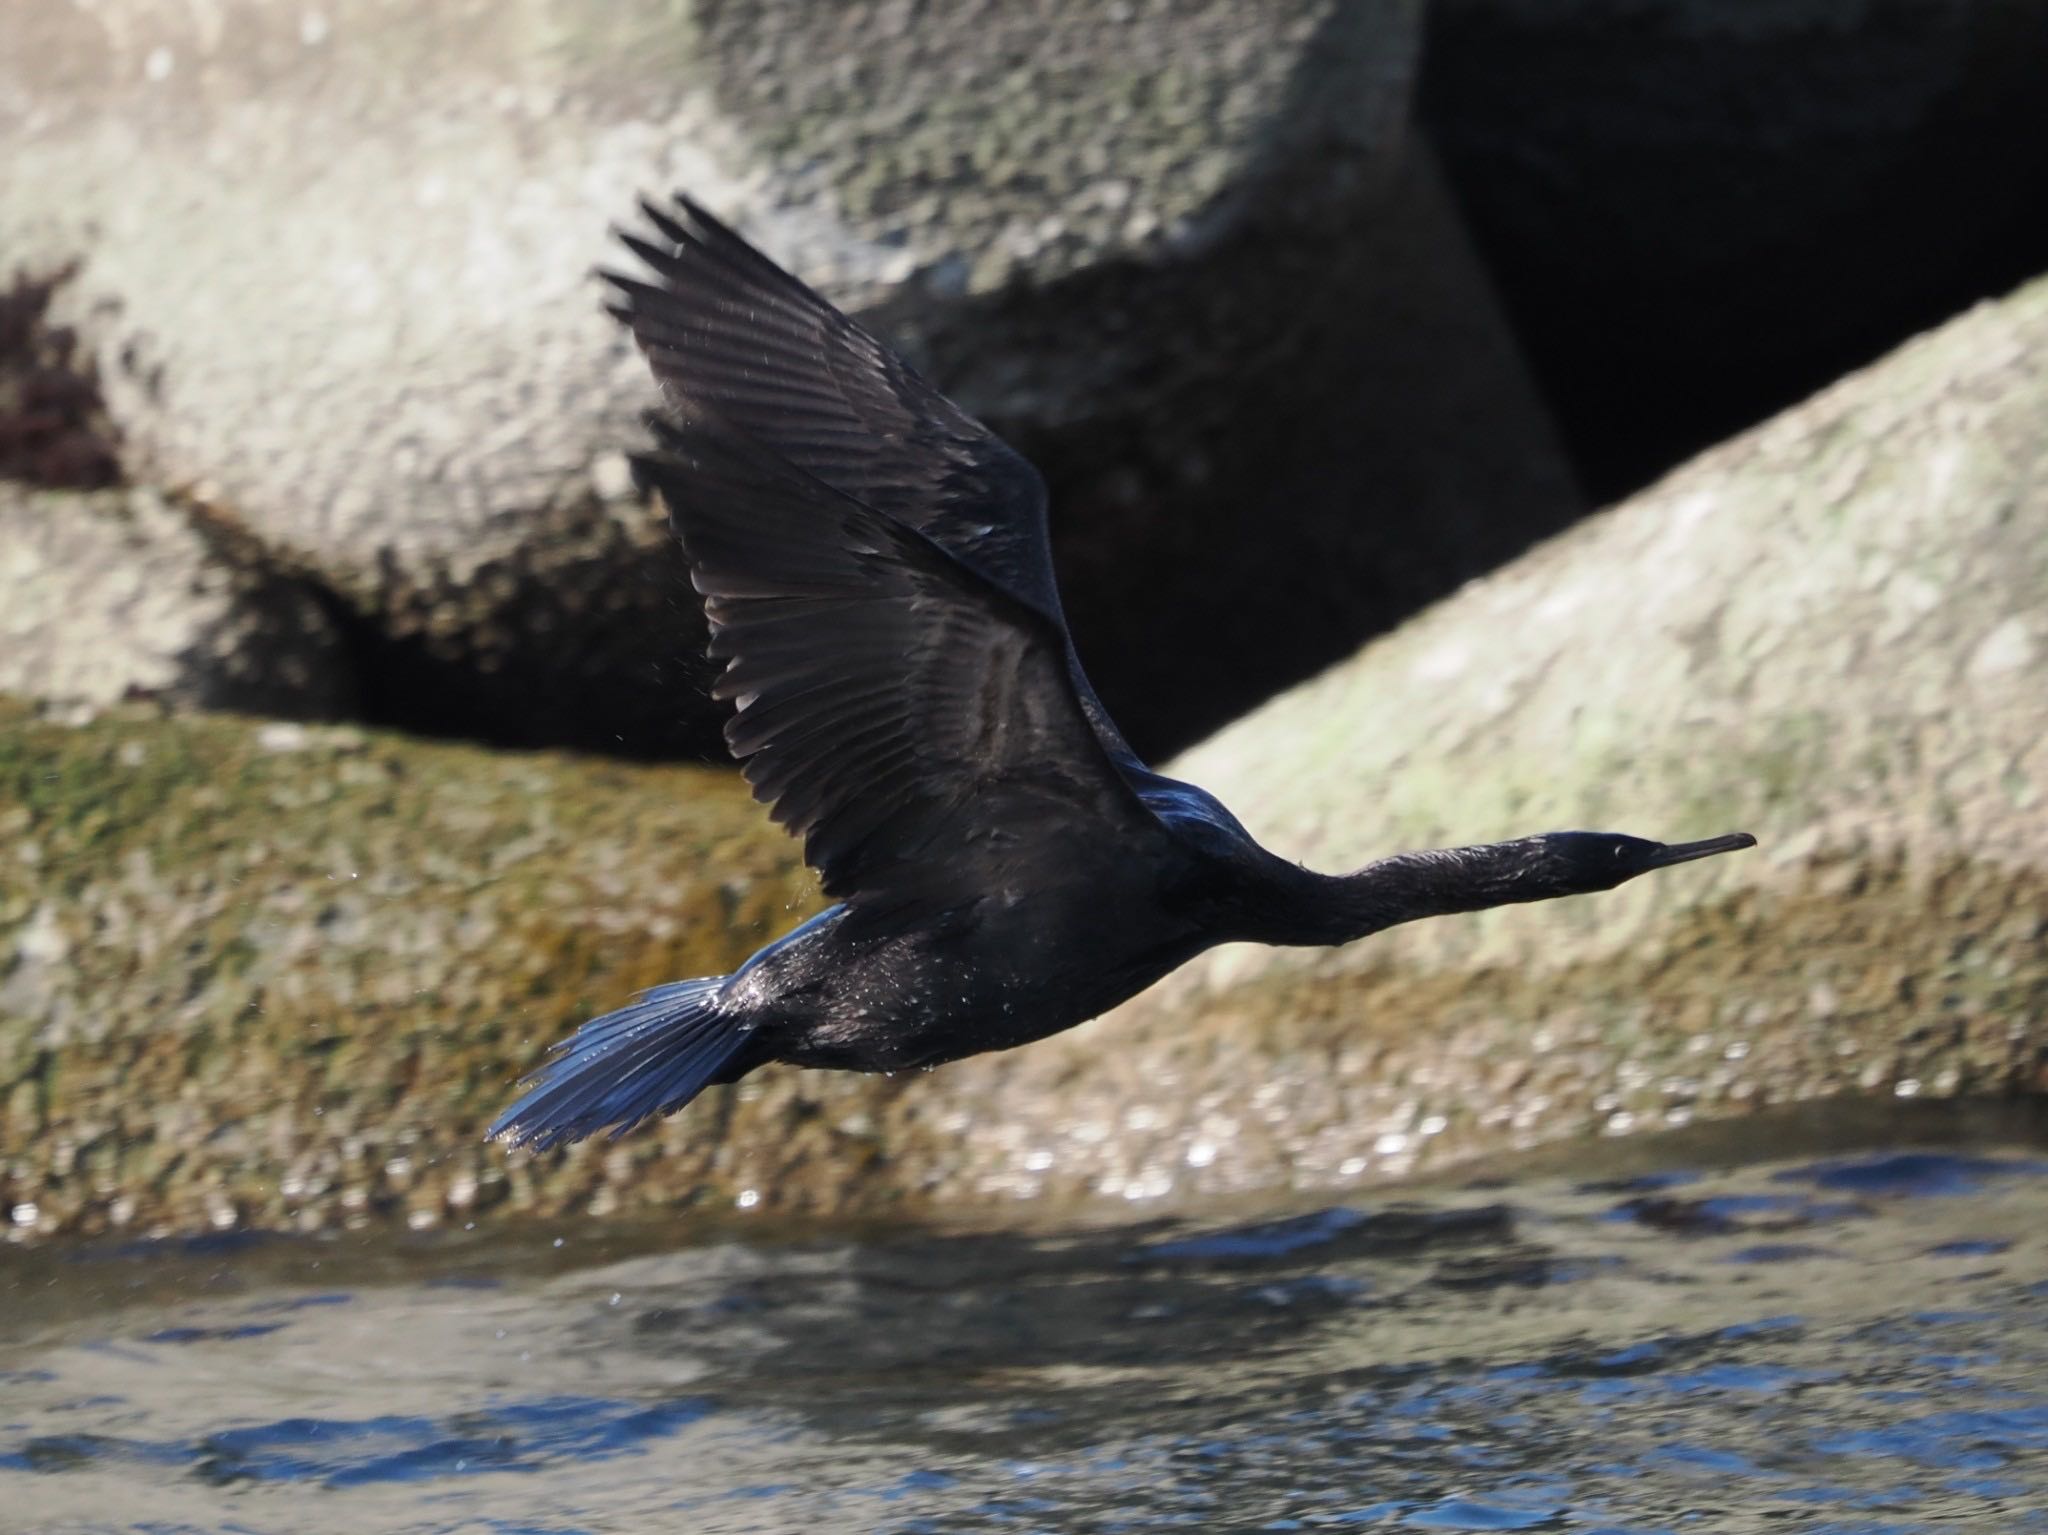 Pelagic Cormorant